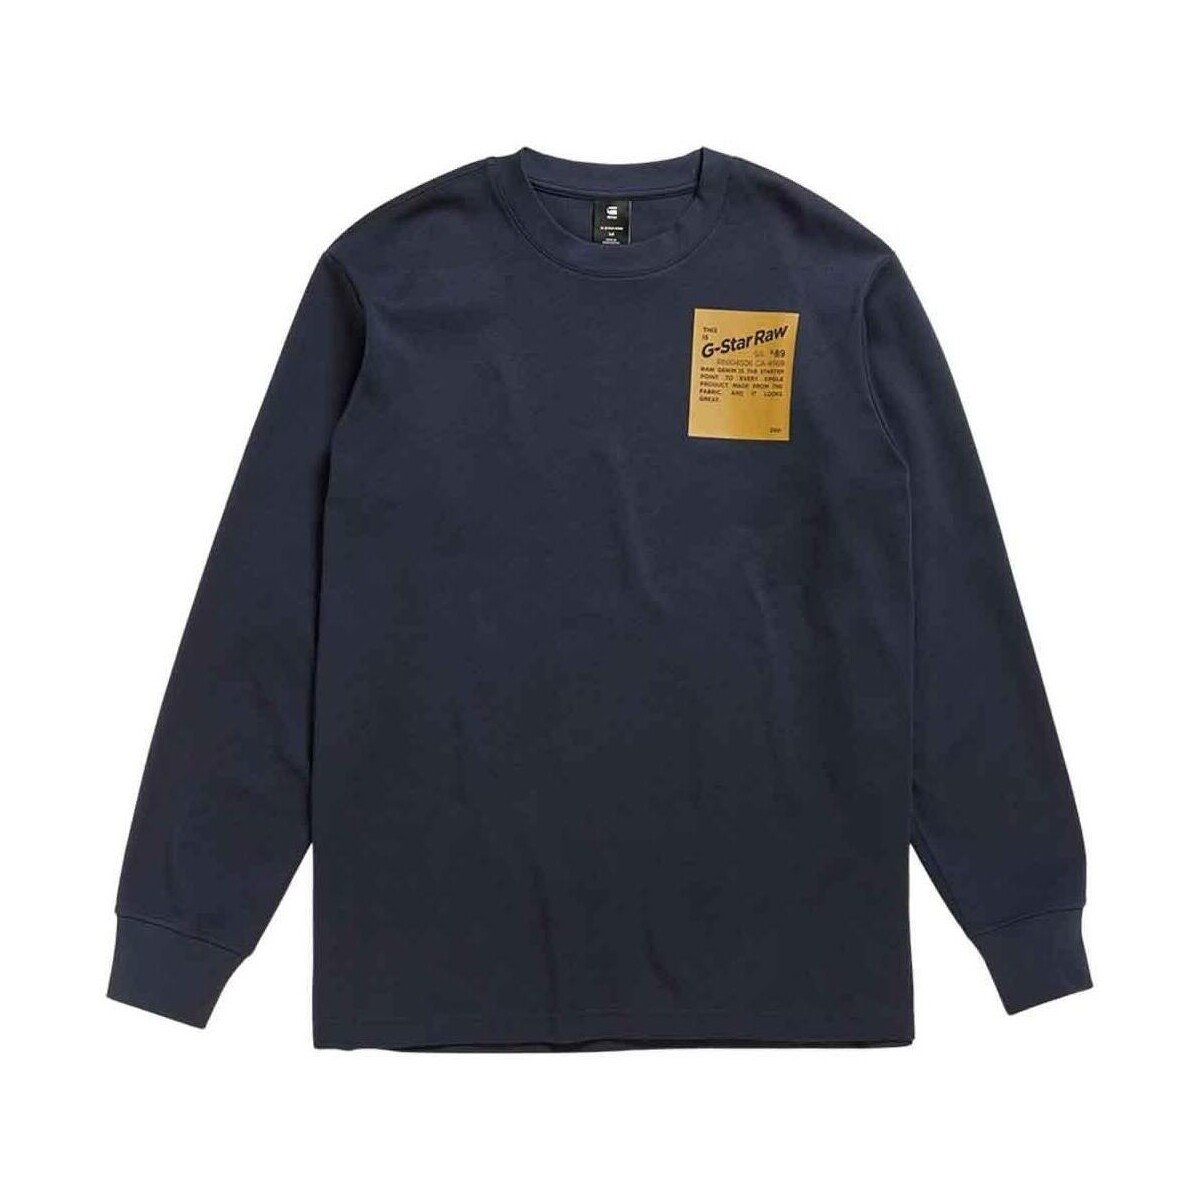 Textiel Heren Sweaters / Sweatshirts G-Star Raw  Blauw